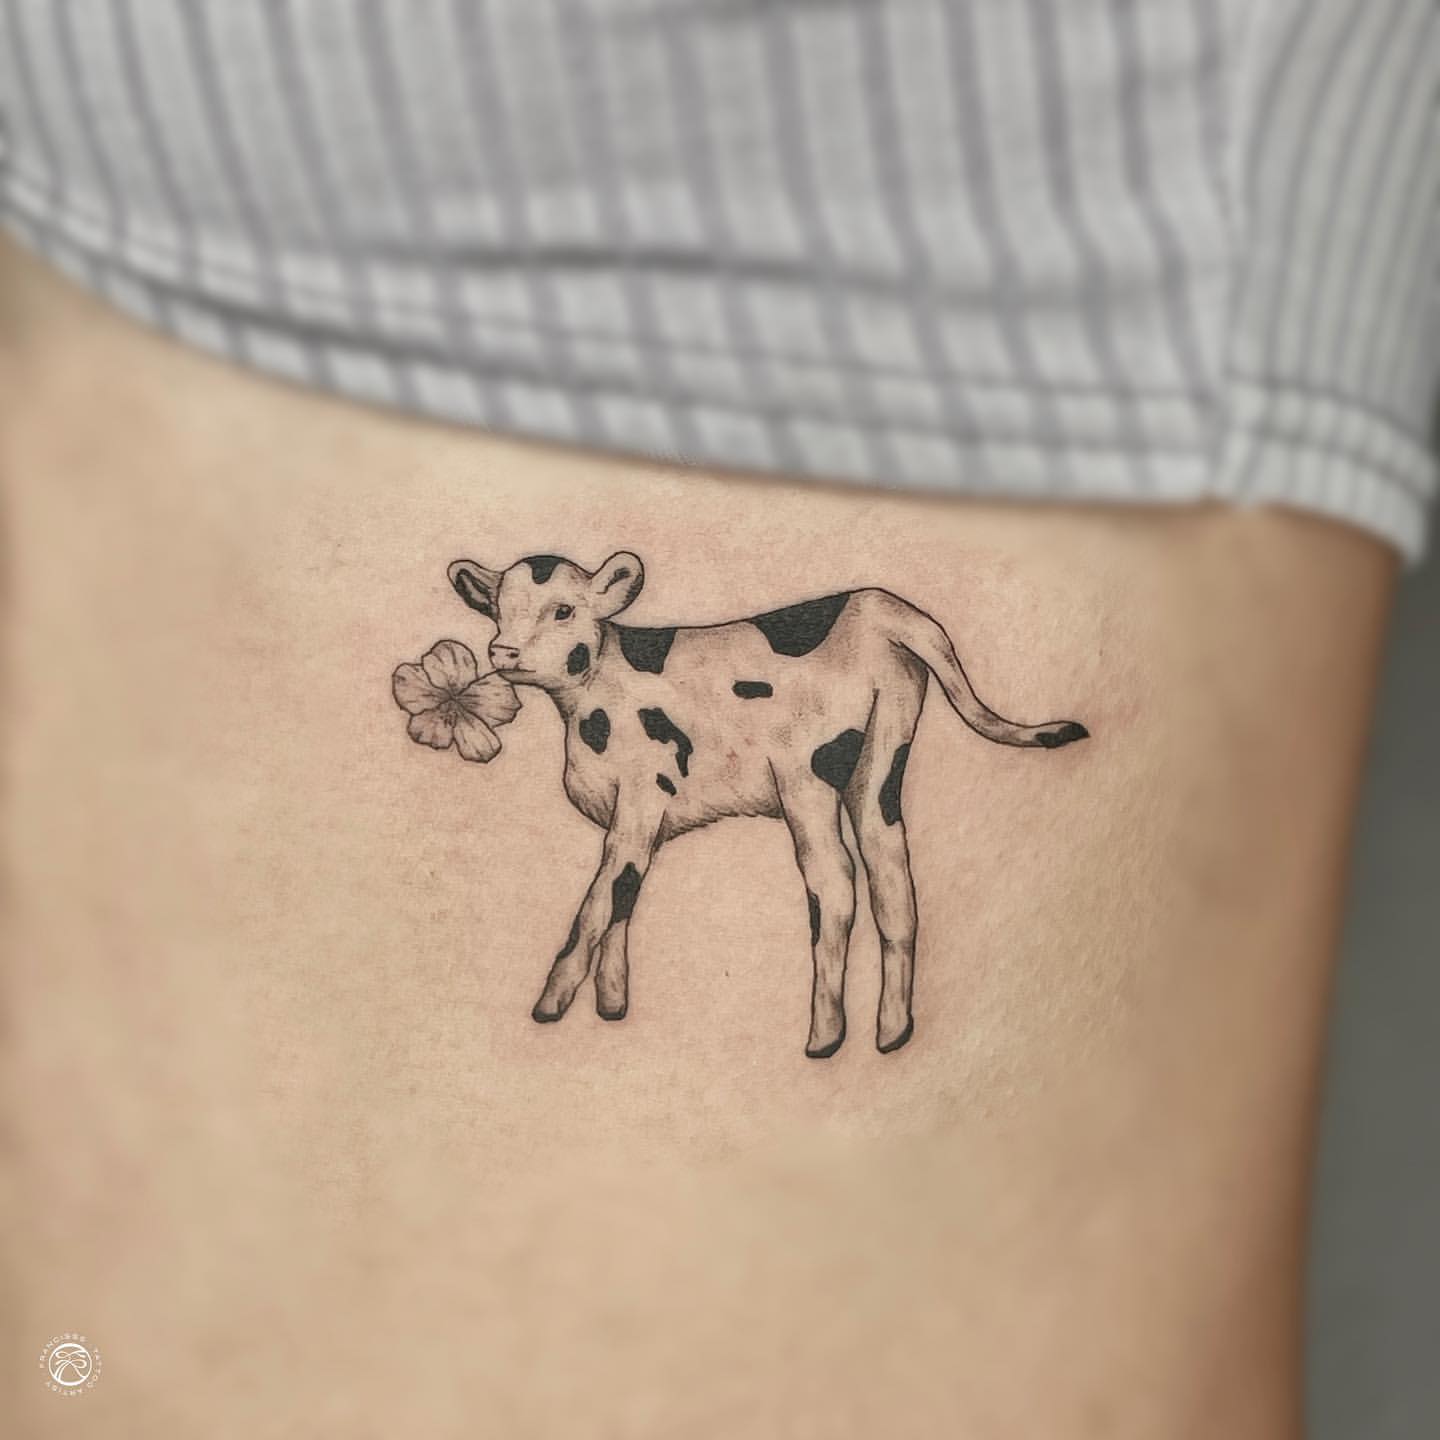 Cow tattoo designs